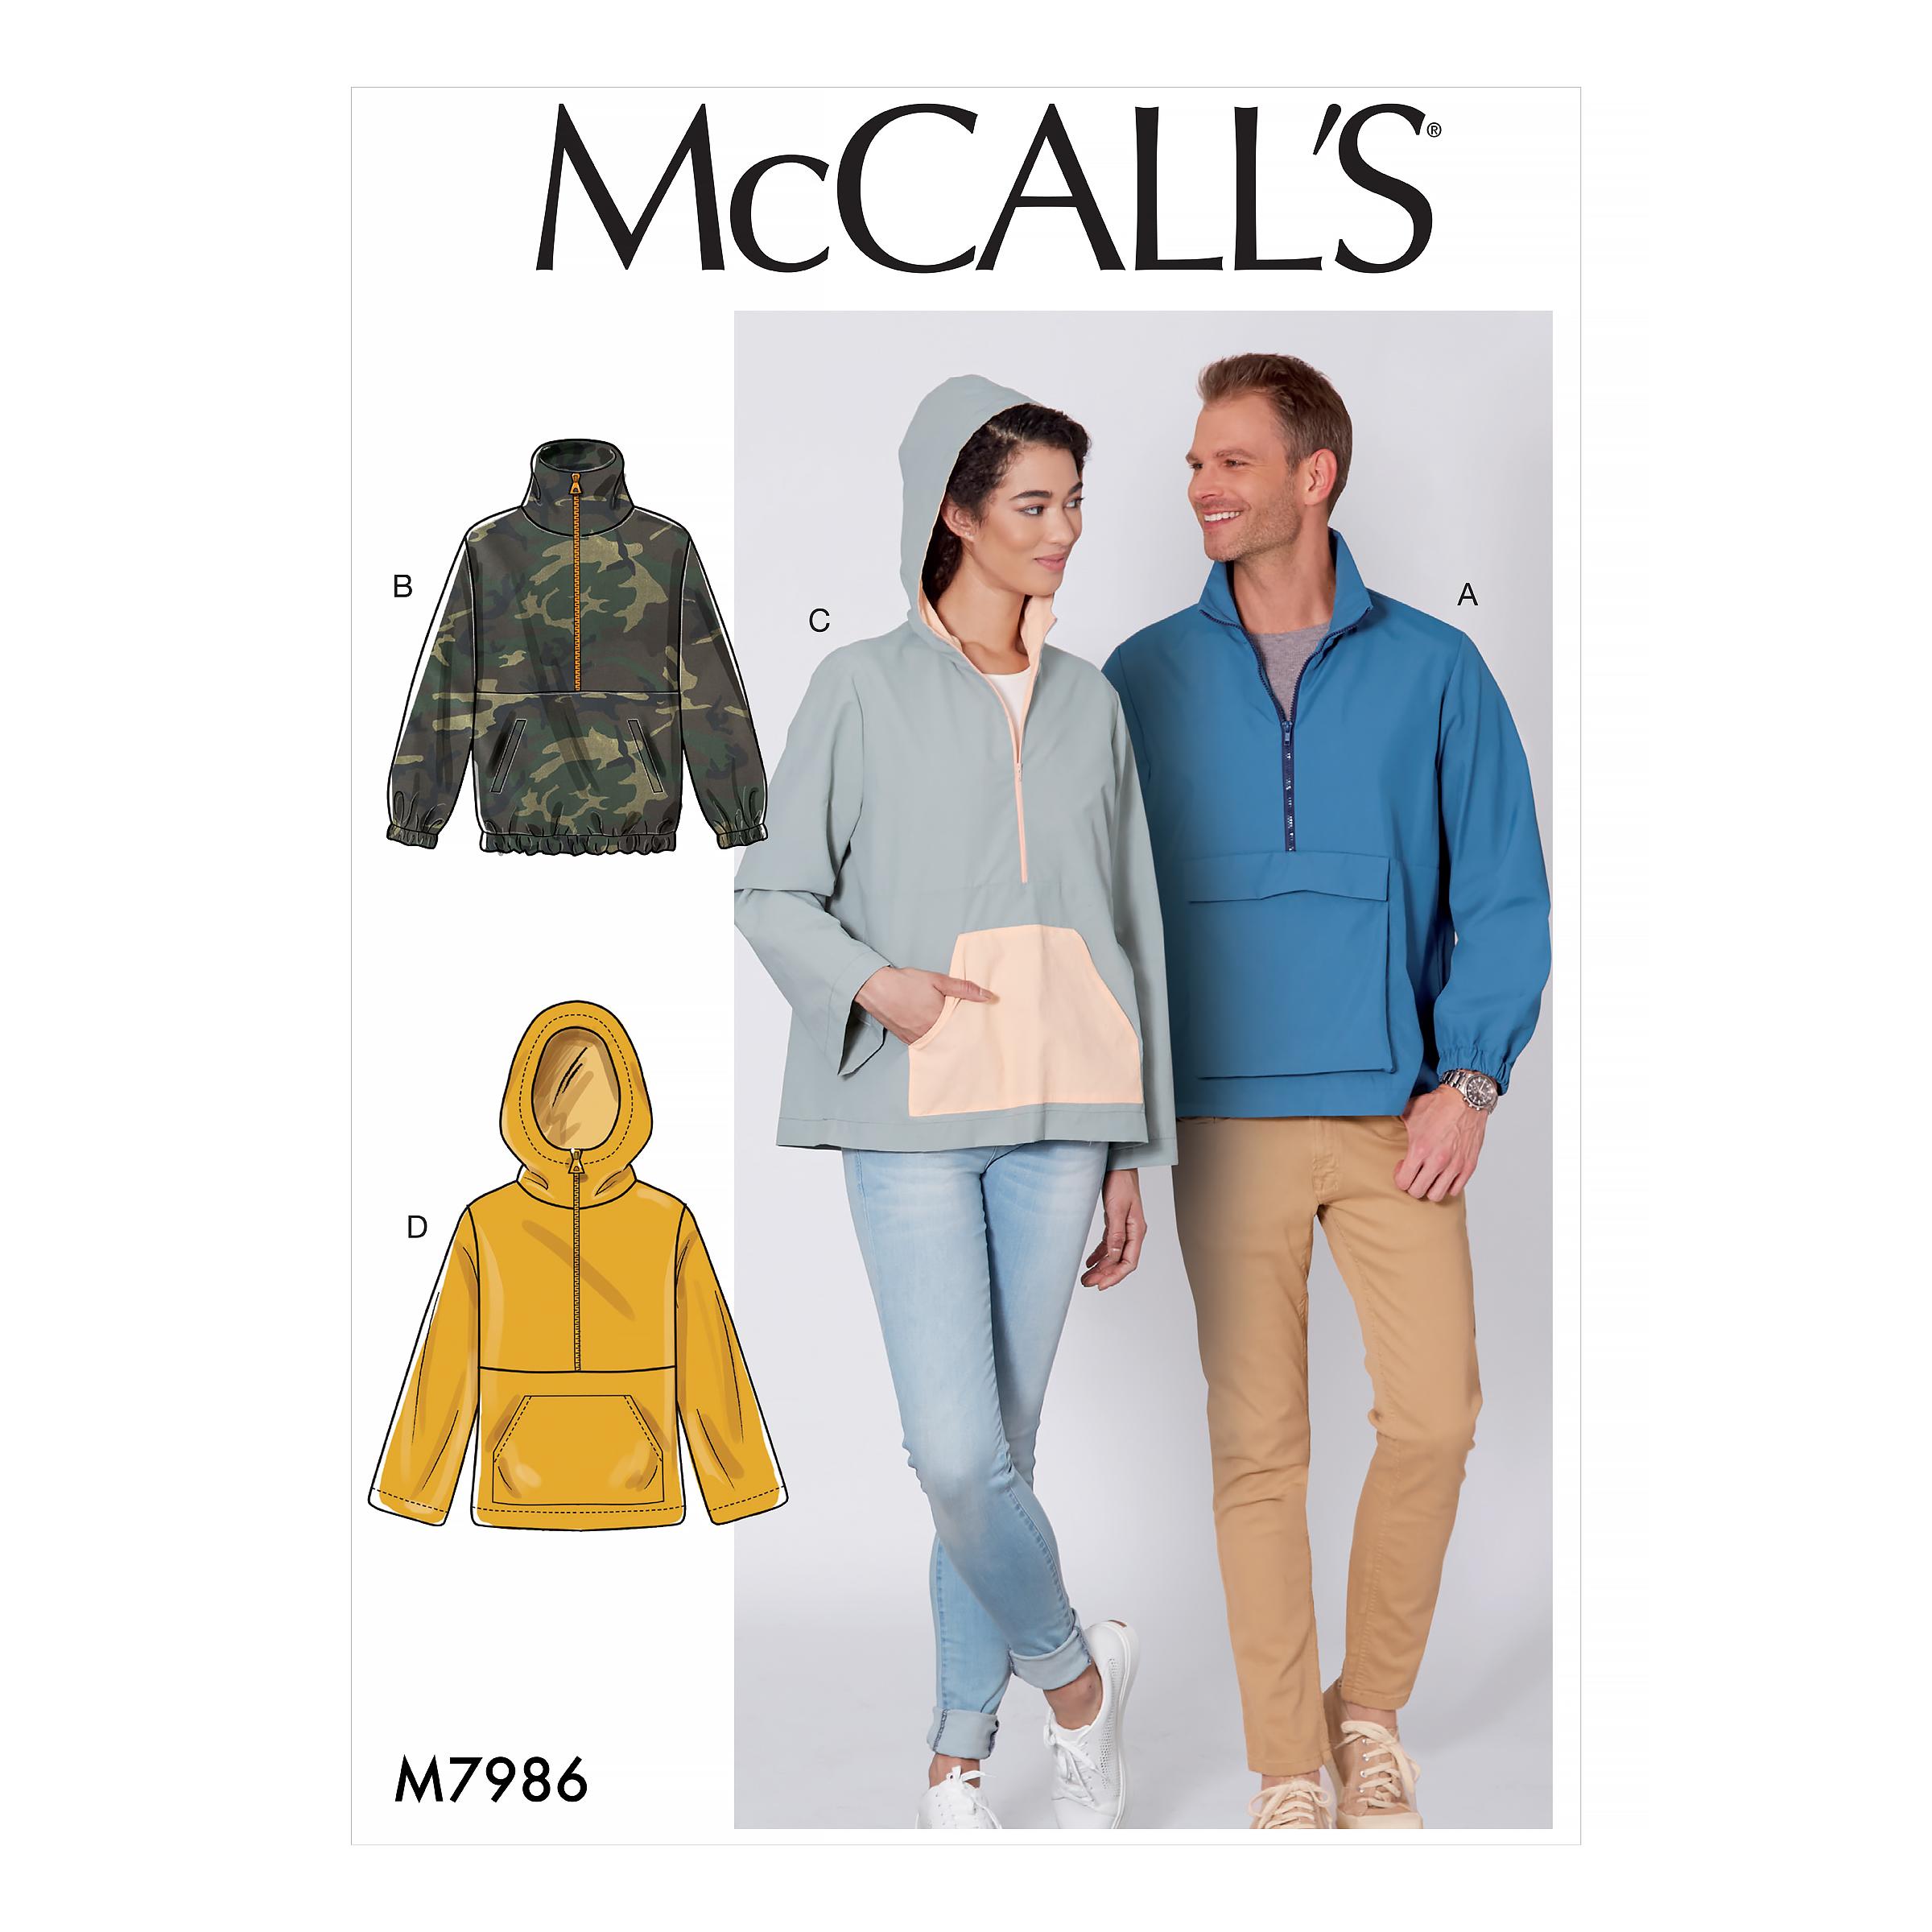 McCalls M7986 Misses Jackets & Vests, Men